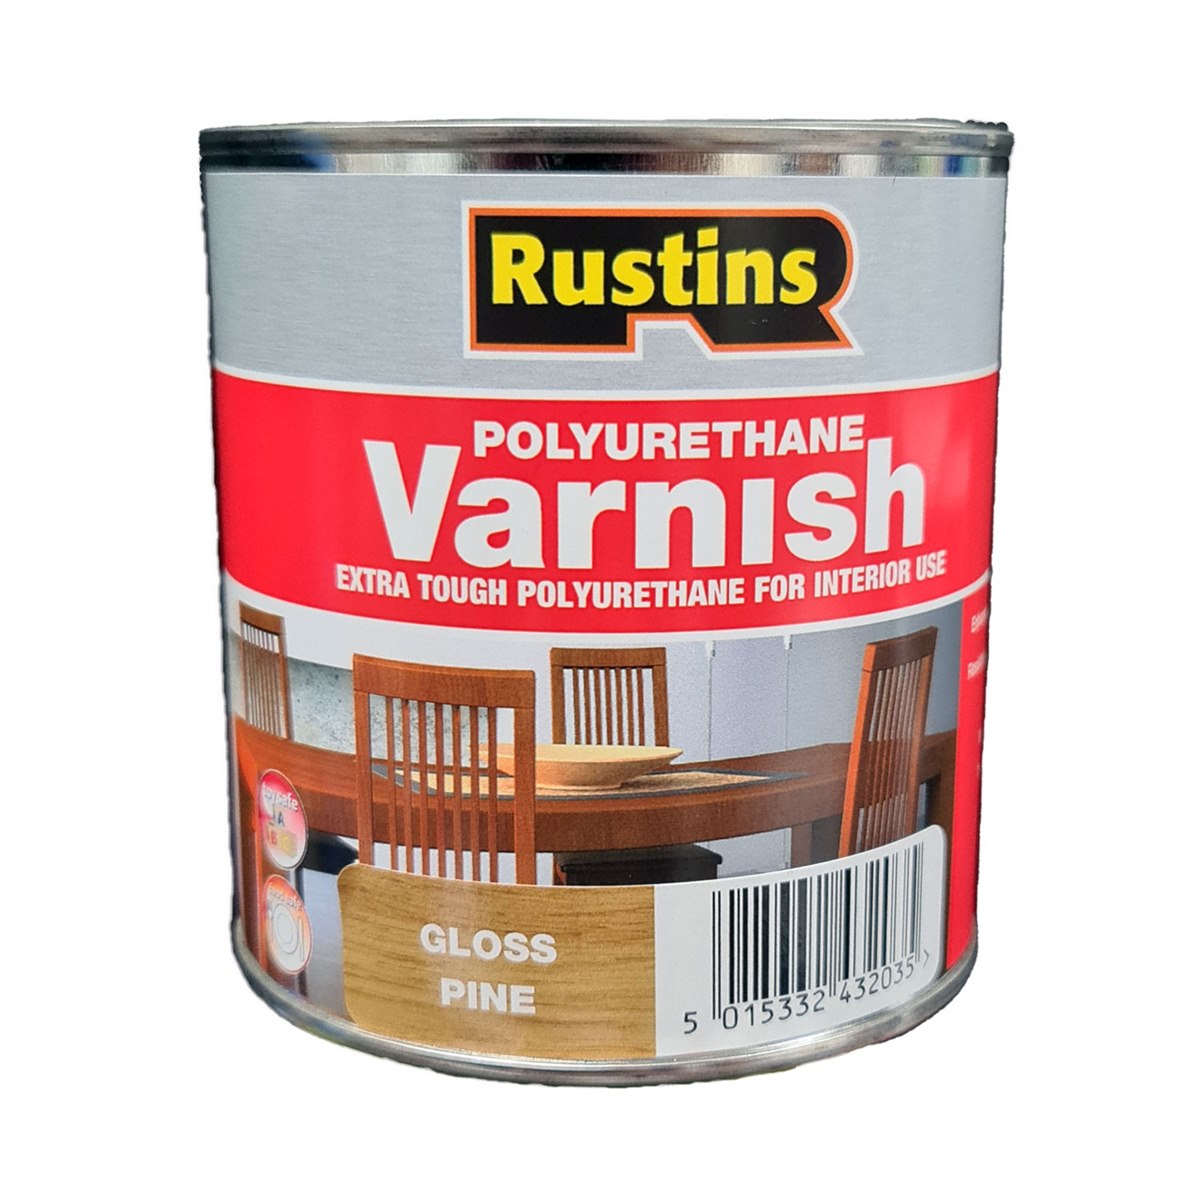 Rustins Polyurethane Varnish Gloss Pine - 500ml